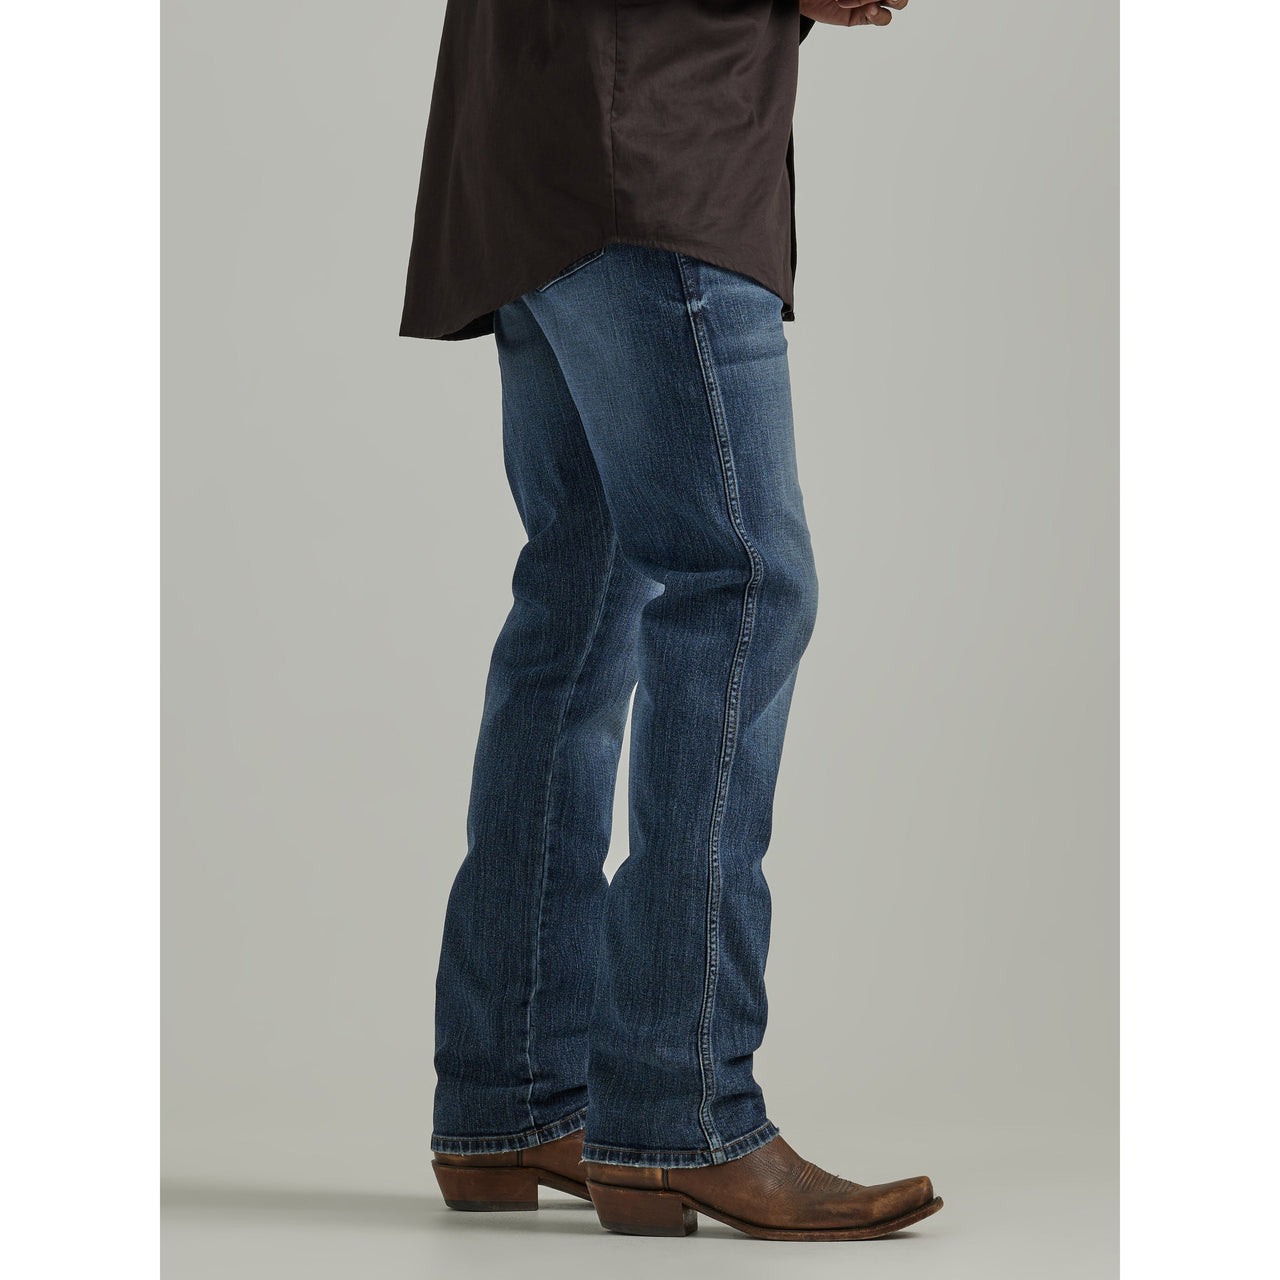 Wrangler Men's Retro Slim Straight Jeans - Gaffrey